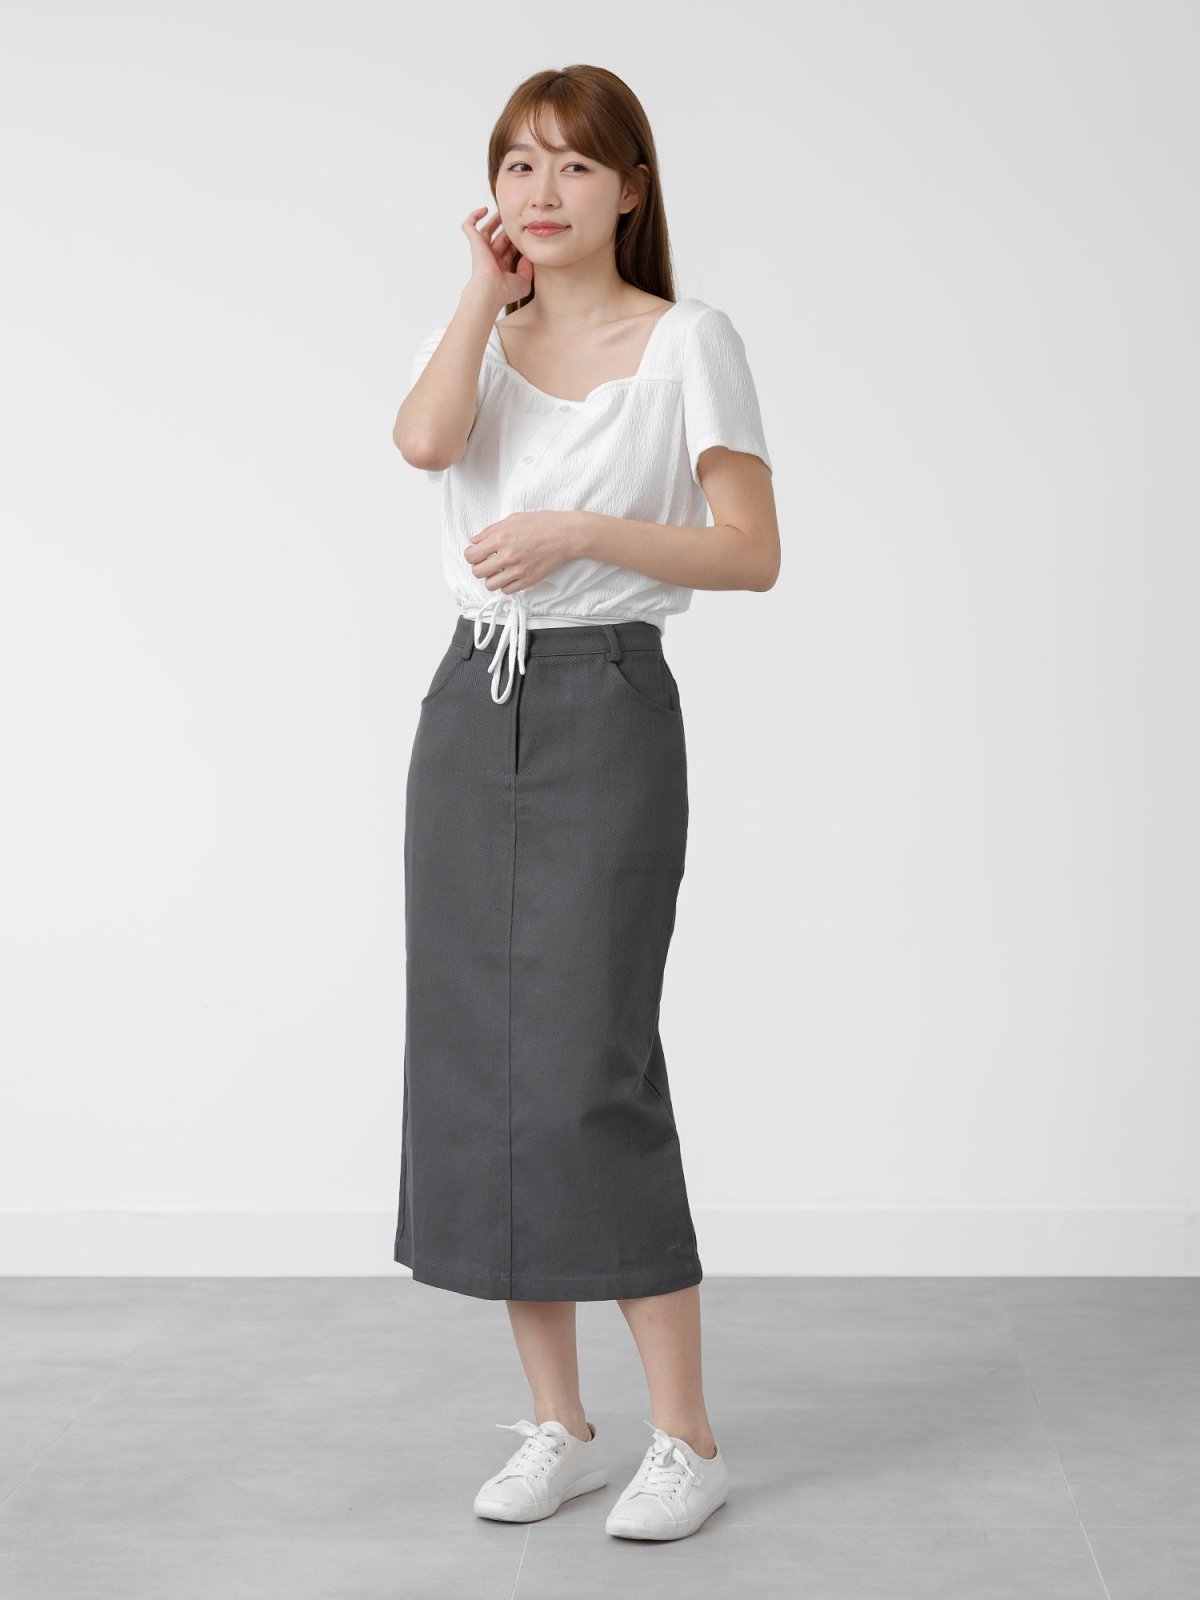 Back Slit Twill Skirt - DAG-DD1325-24CharcoalS - Charcoal - S - D'zage Designs